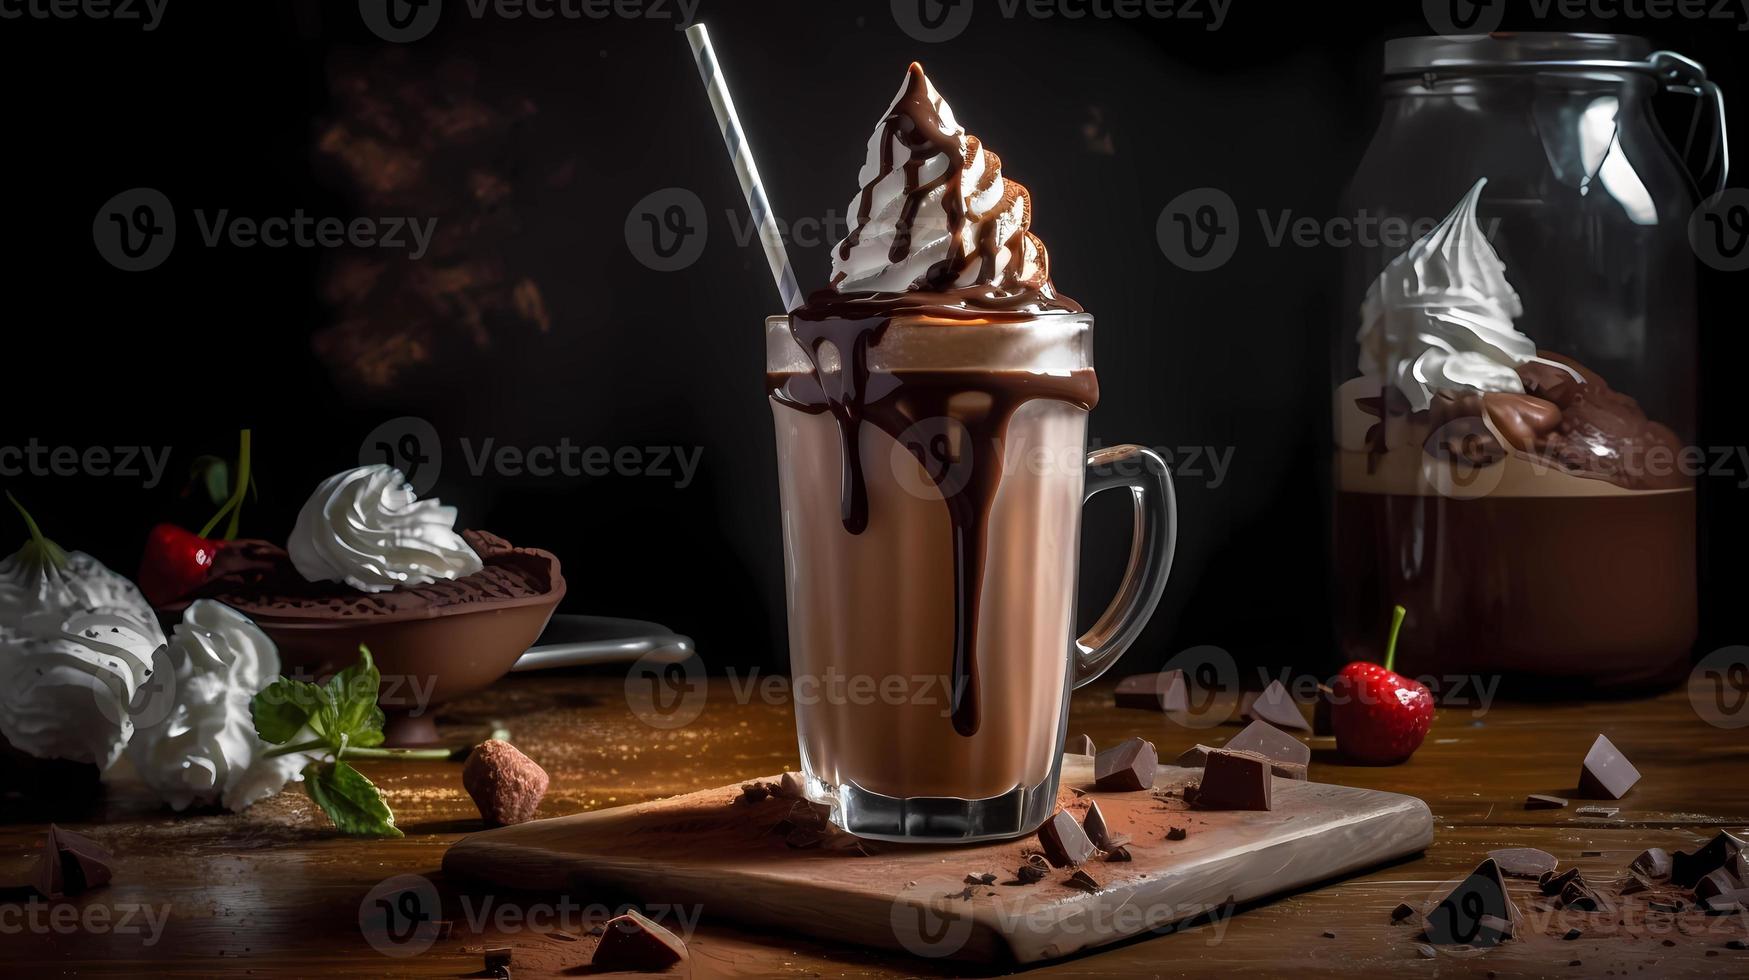 Chocolate milkshake with whipped cream, strawberries and dark chocolate pieces on a dark background. photo